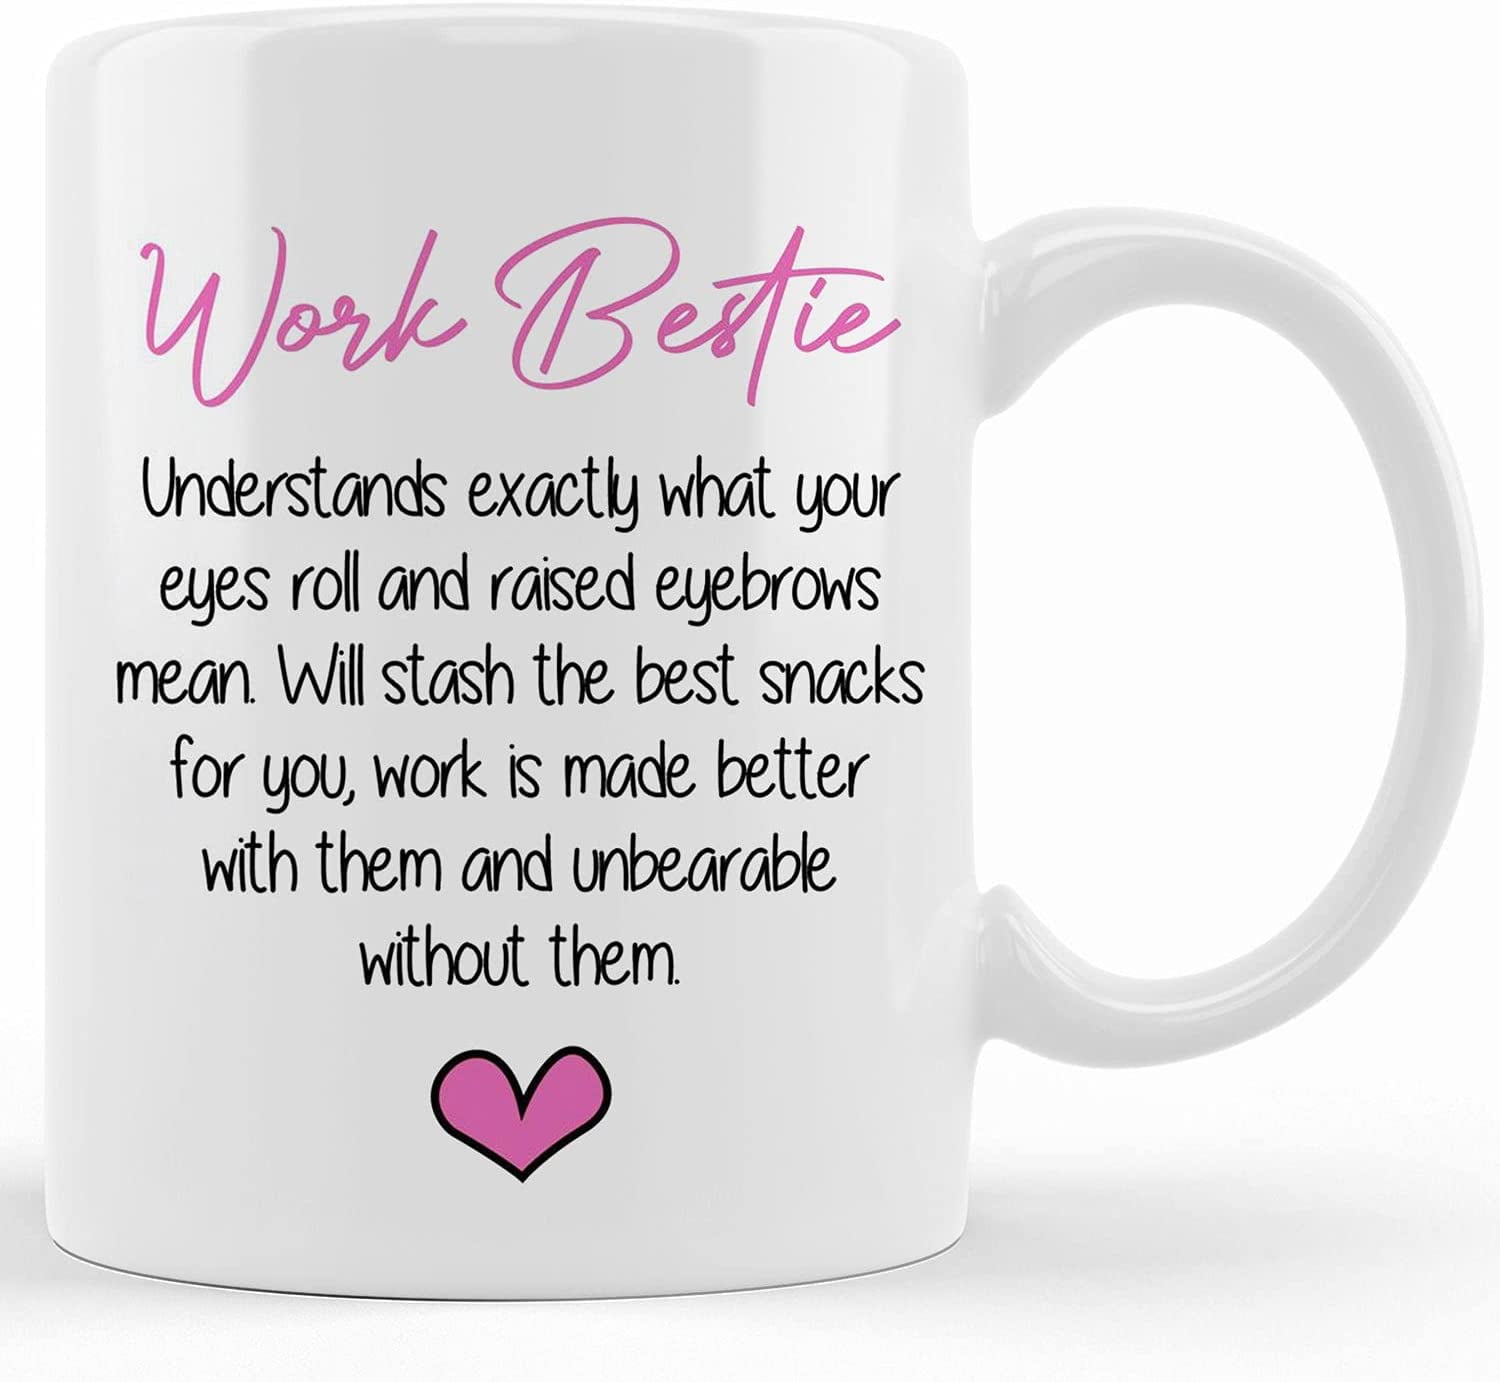  Personalized Work Bestie Definition Mug with Photo